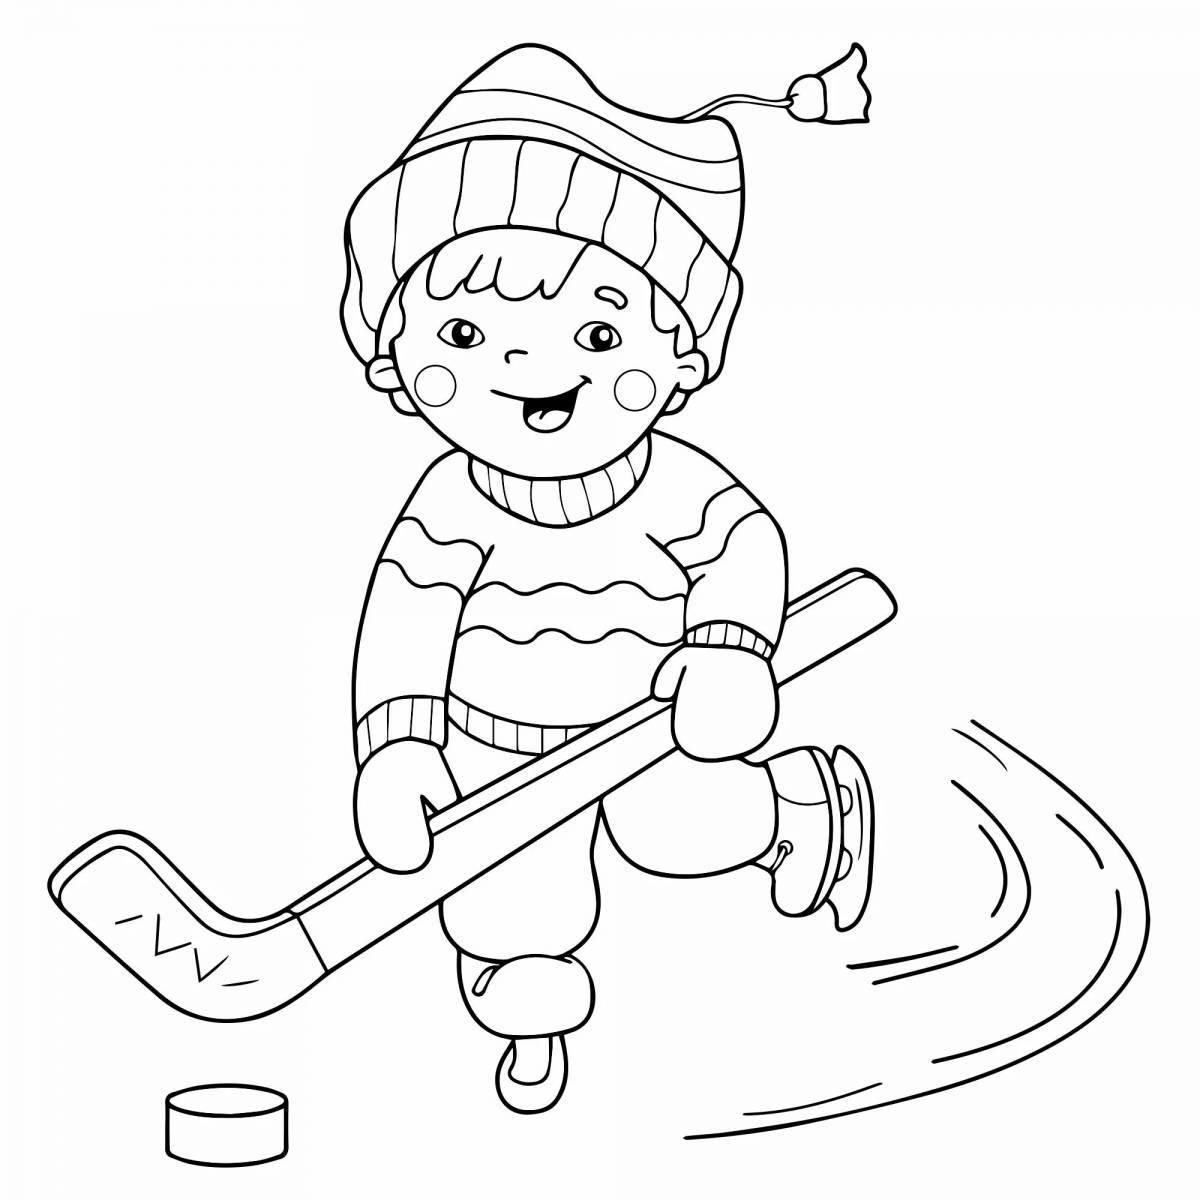 Adorable winter sports coloring book for kindergarten